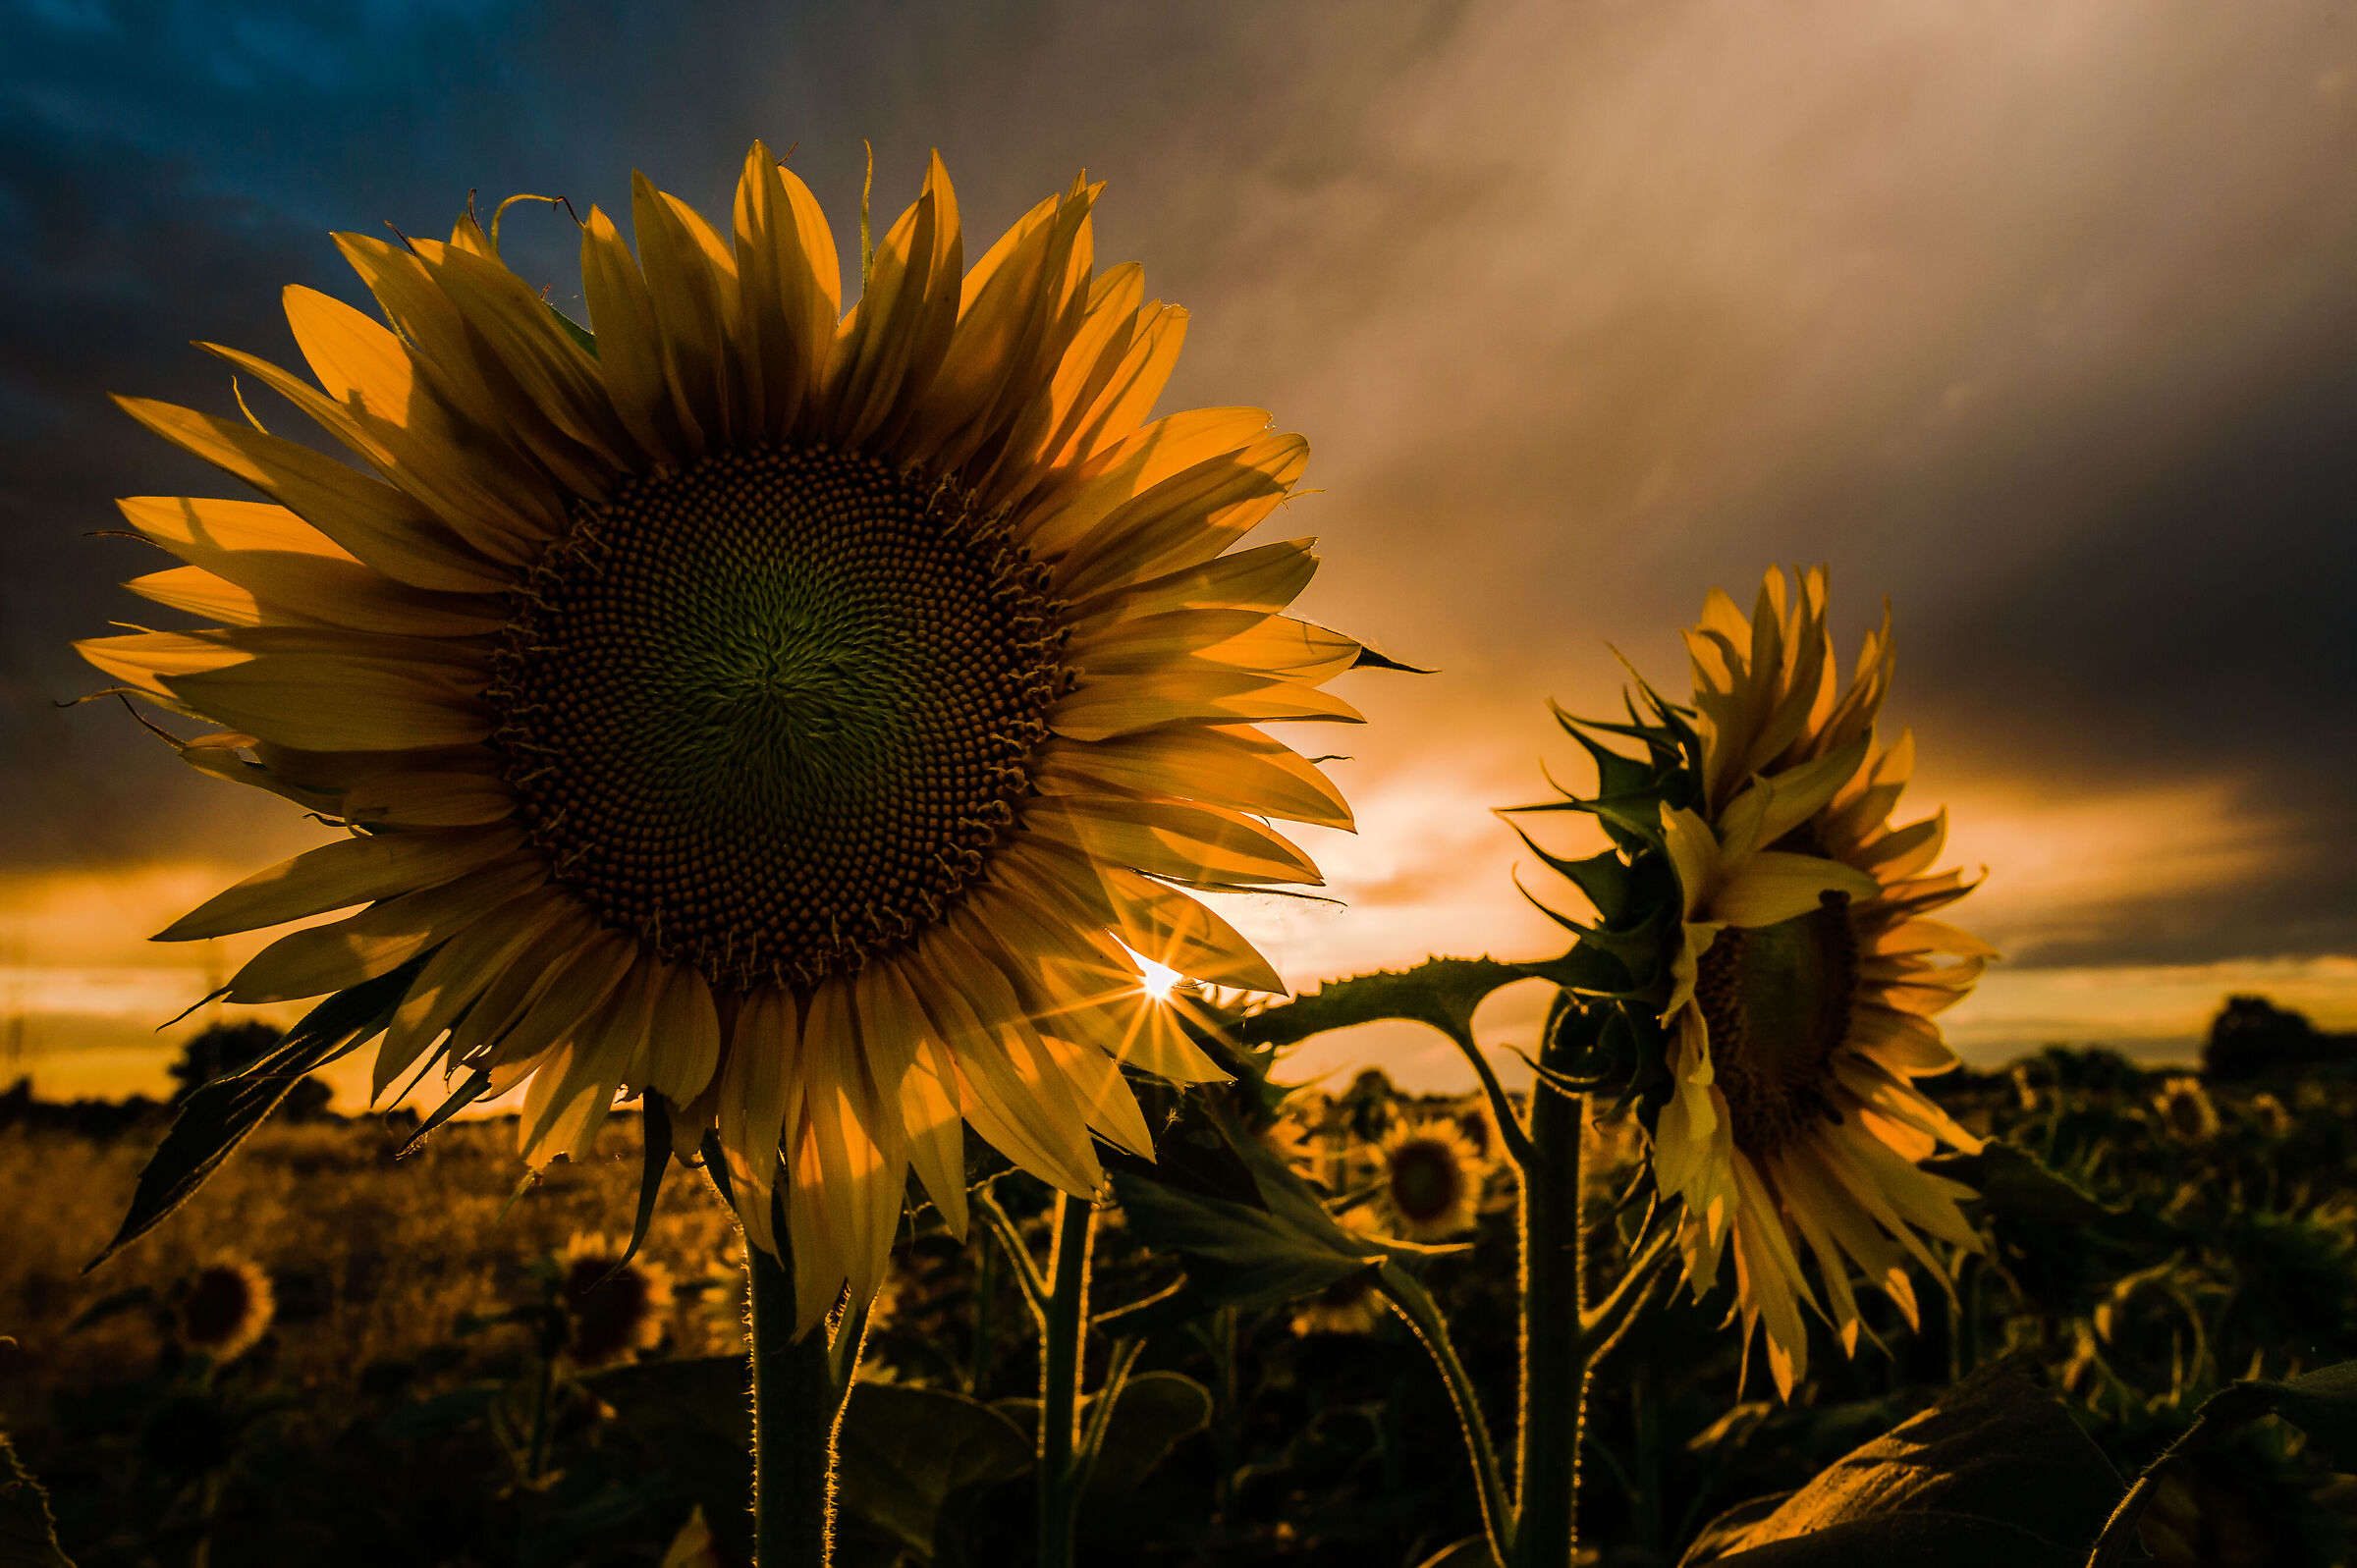 Sunflowers at sunset 1...